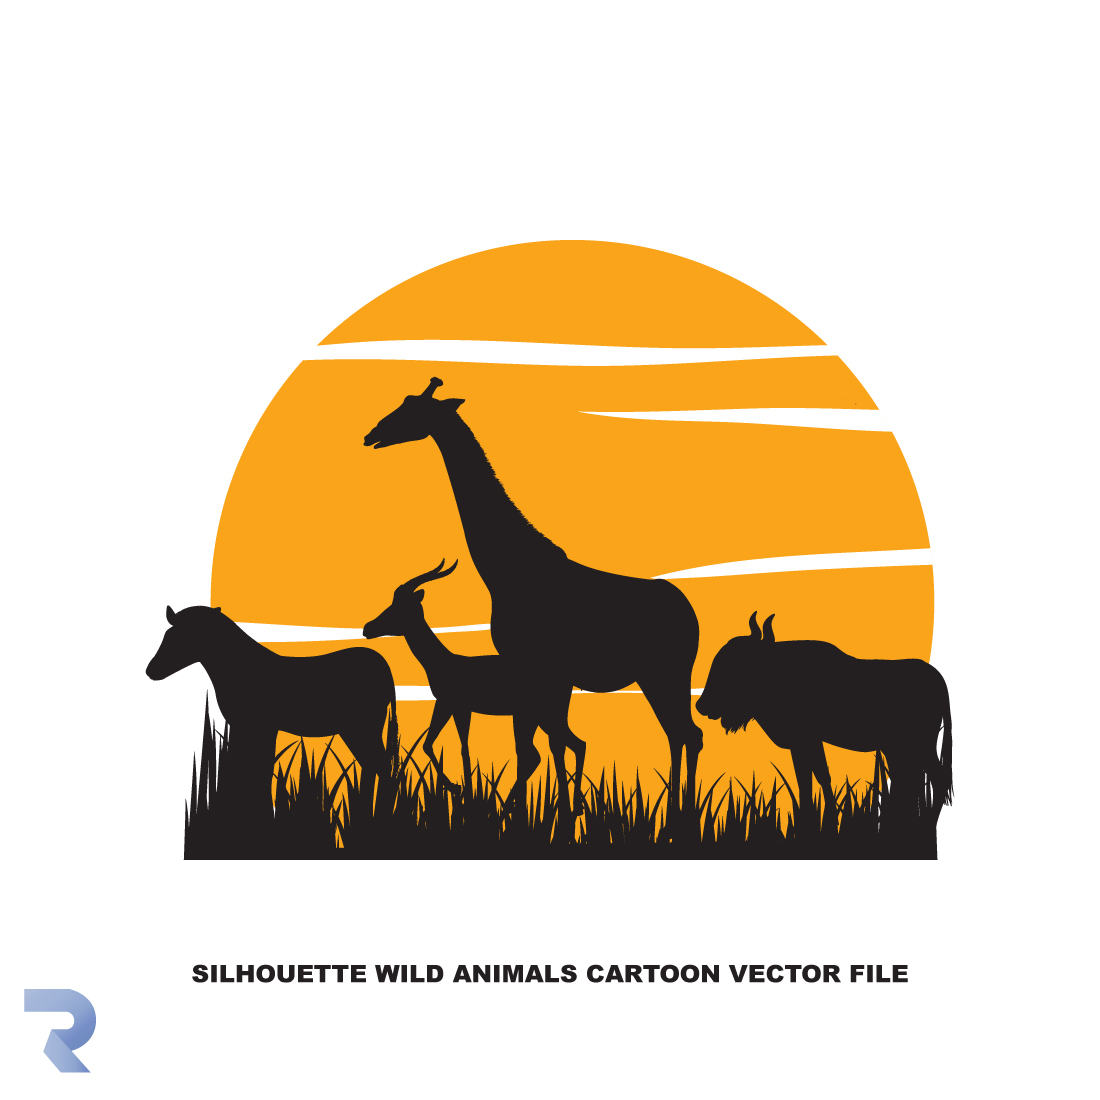 Silhouette wild animals cartoon vector file cover image.